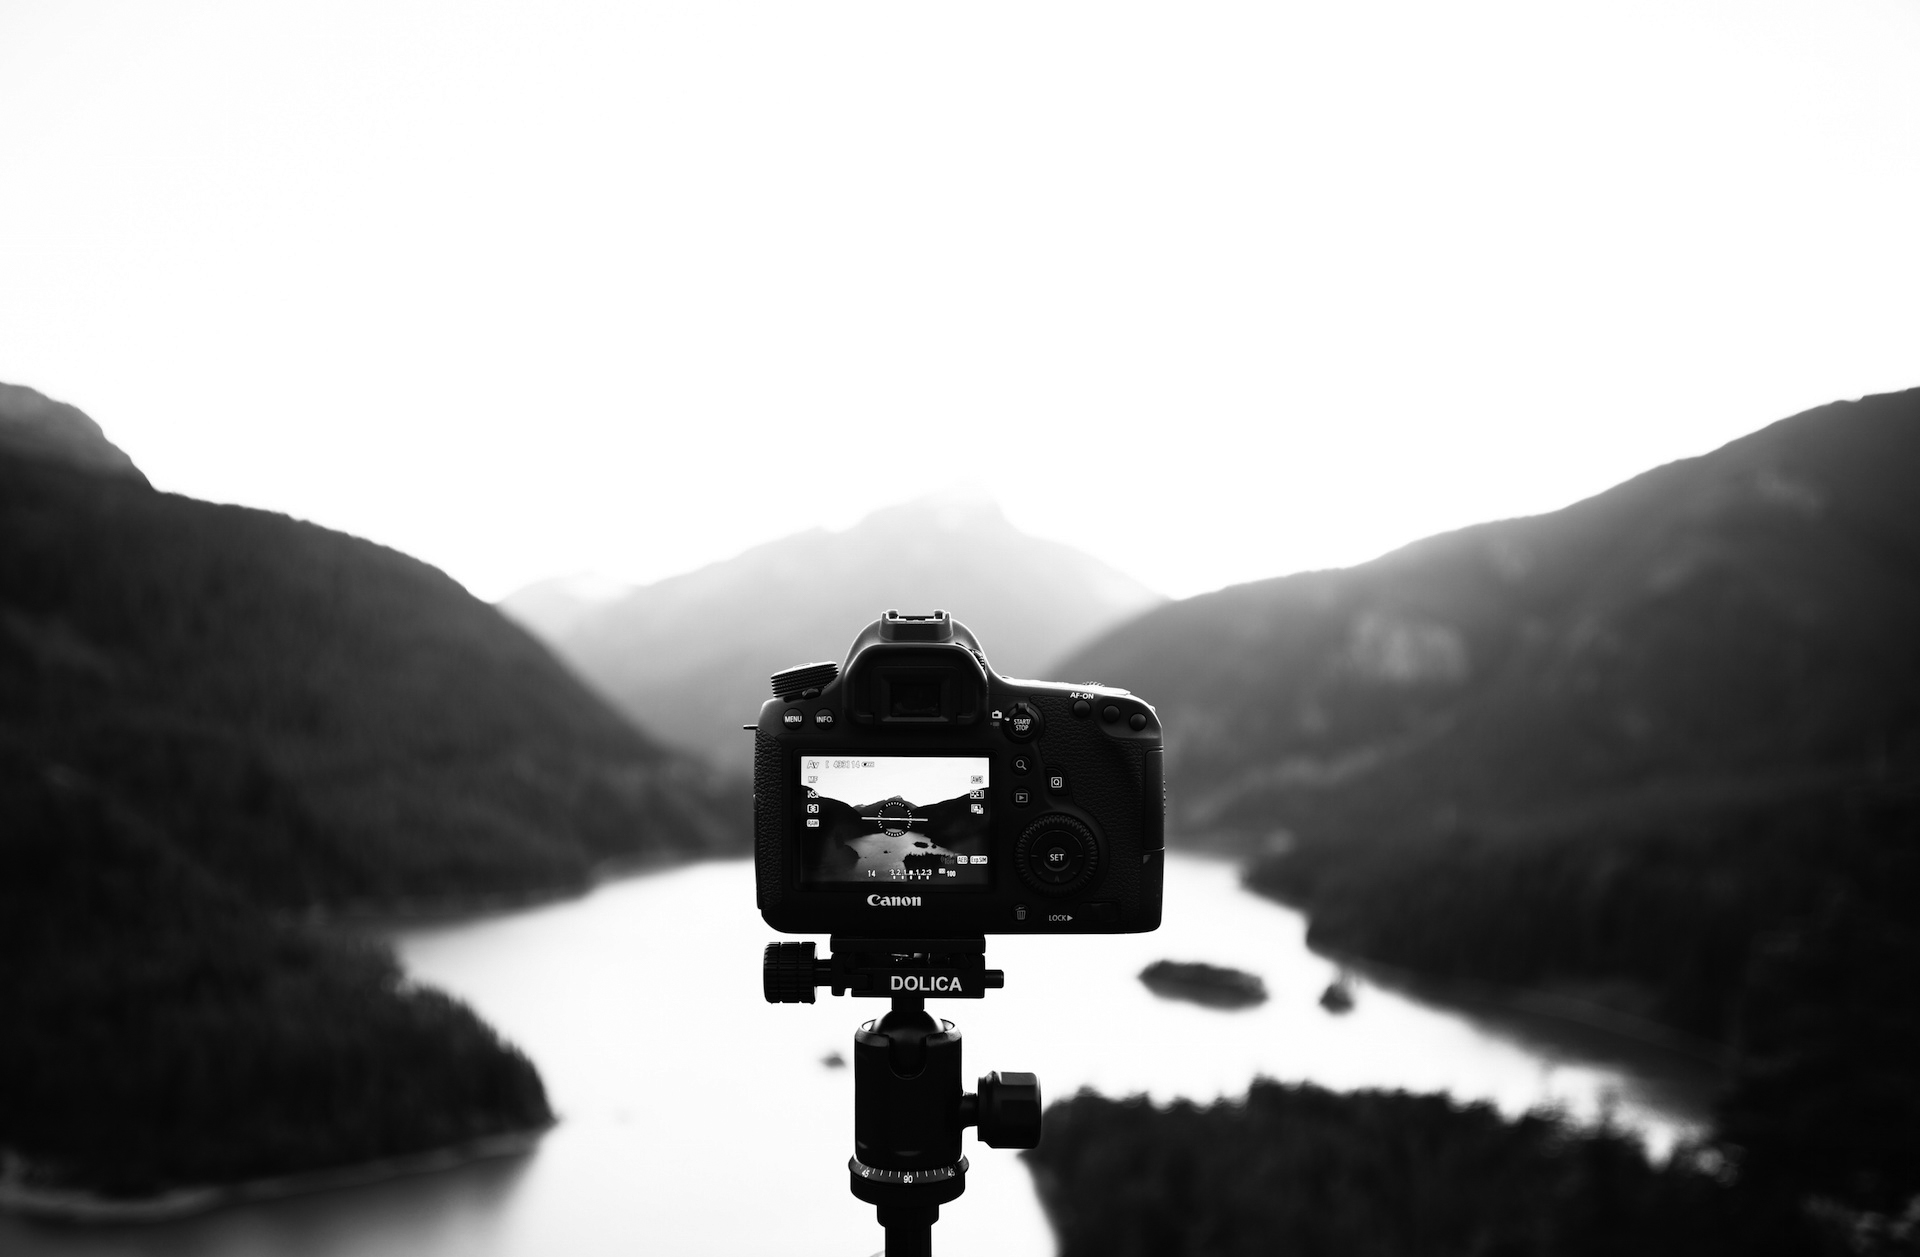 Shooting panoramic images